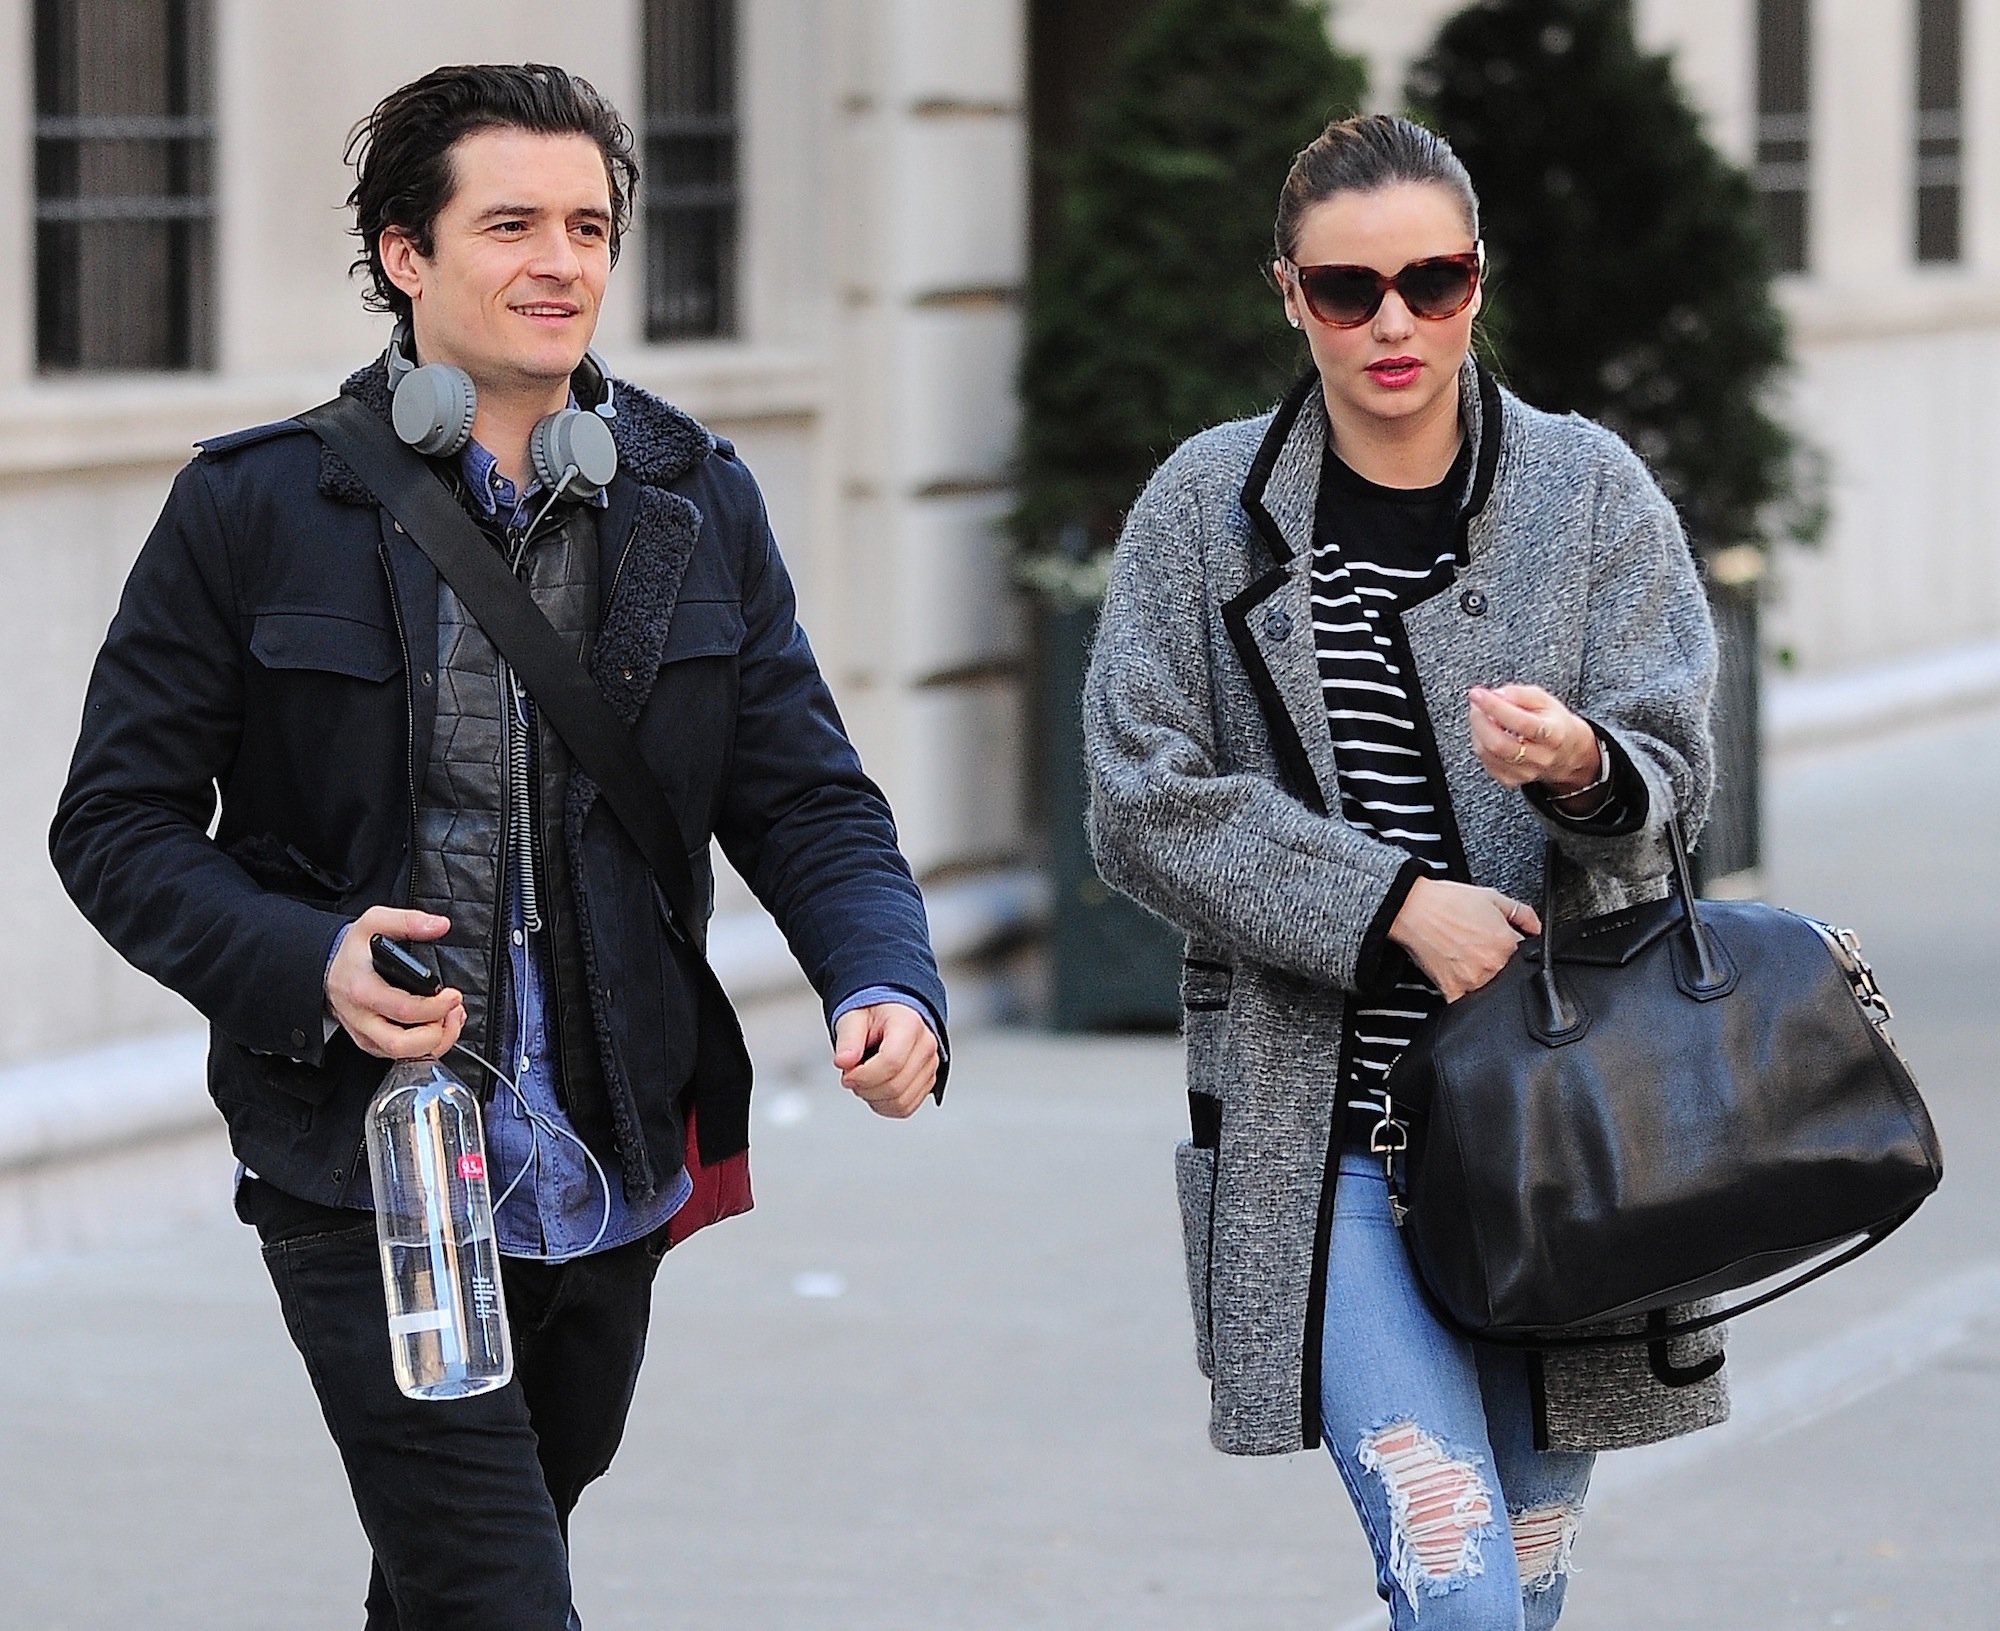 Orlando Bloom and Miranda Kerr walking in New York City.